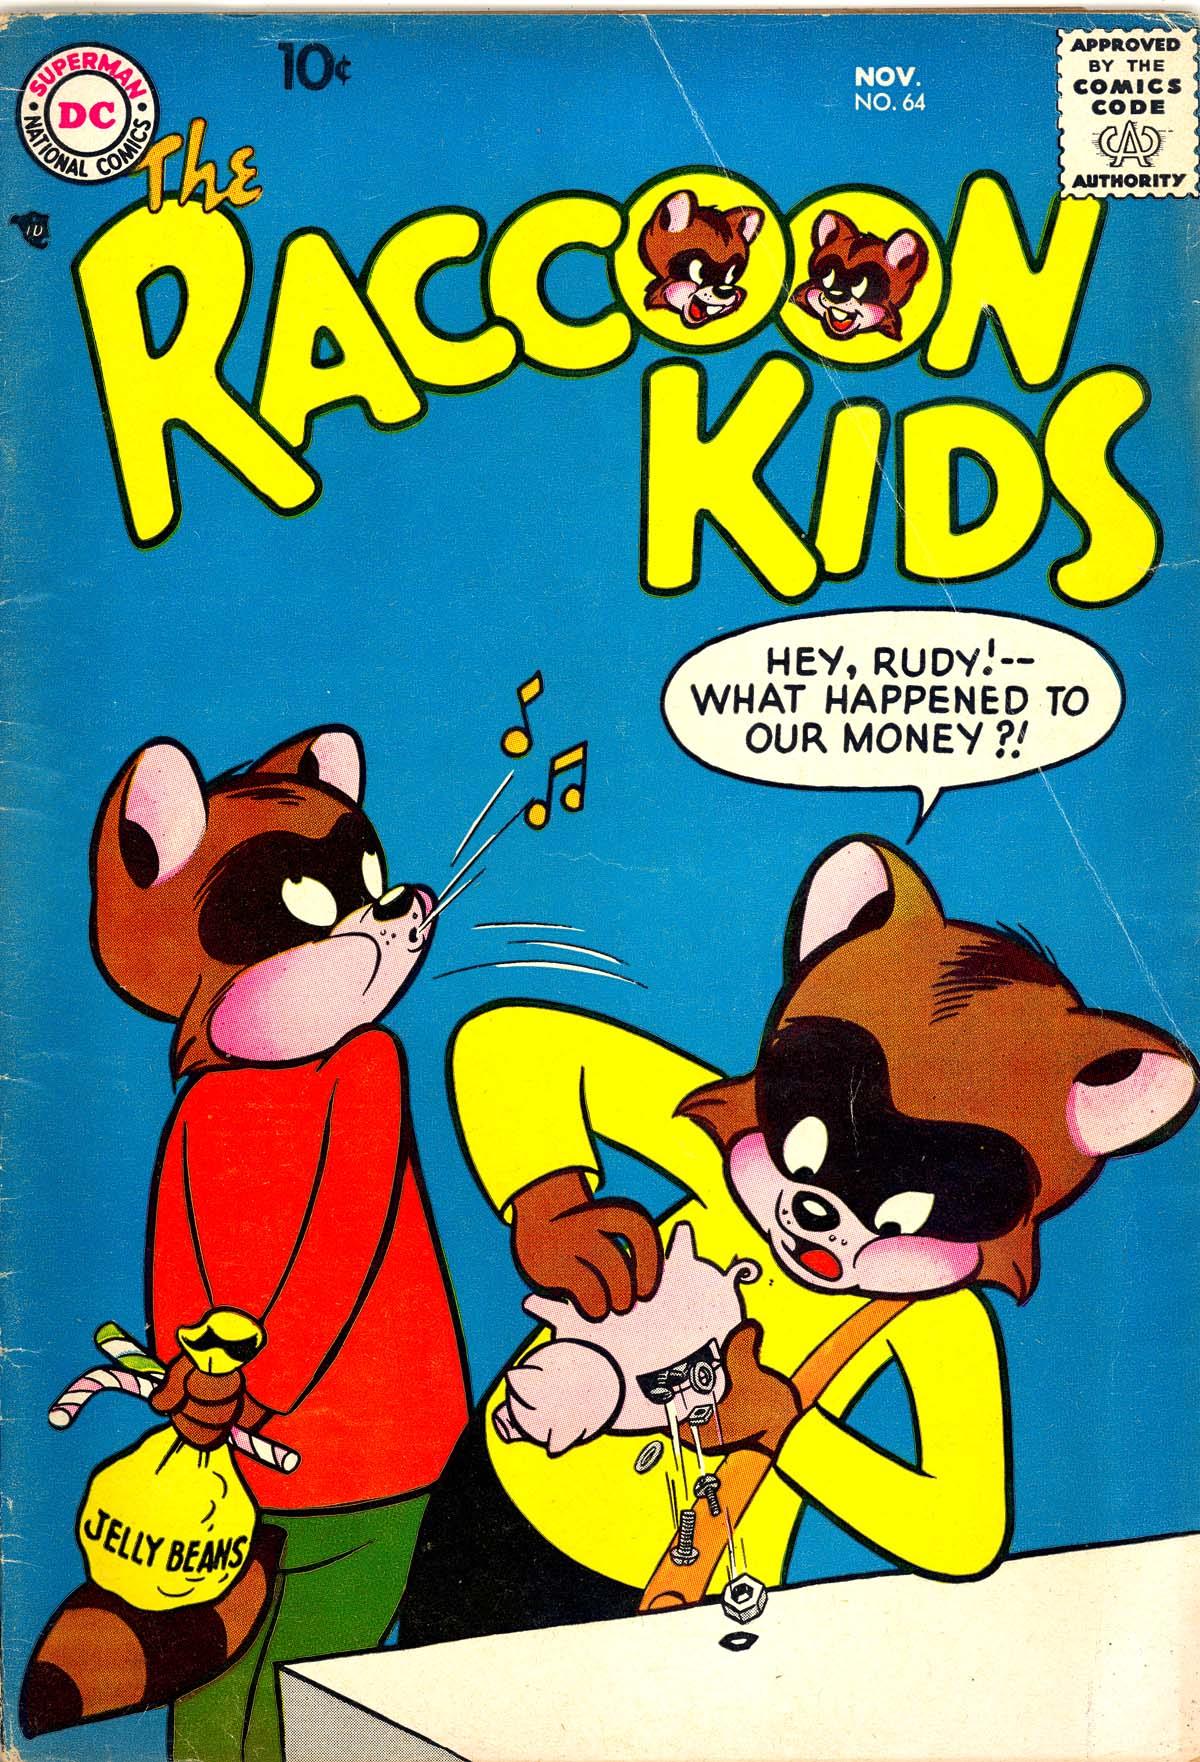 Raccoon Kids Vol. 1 #64